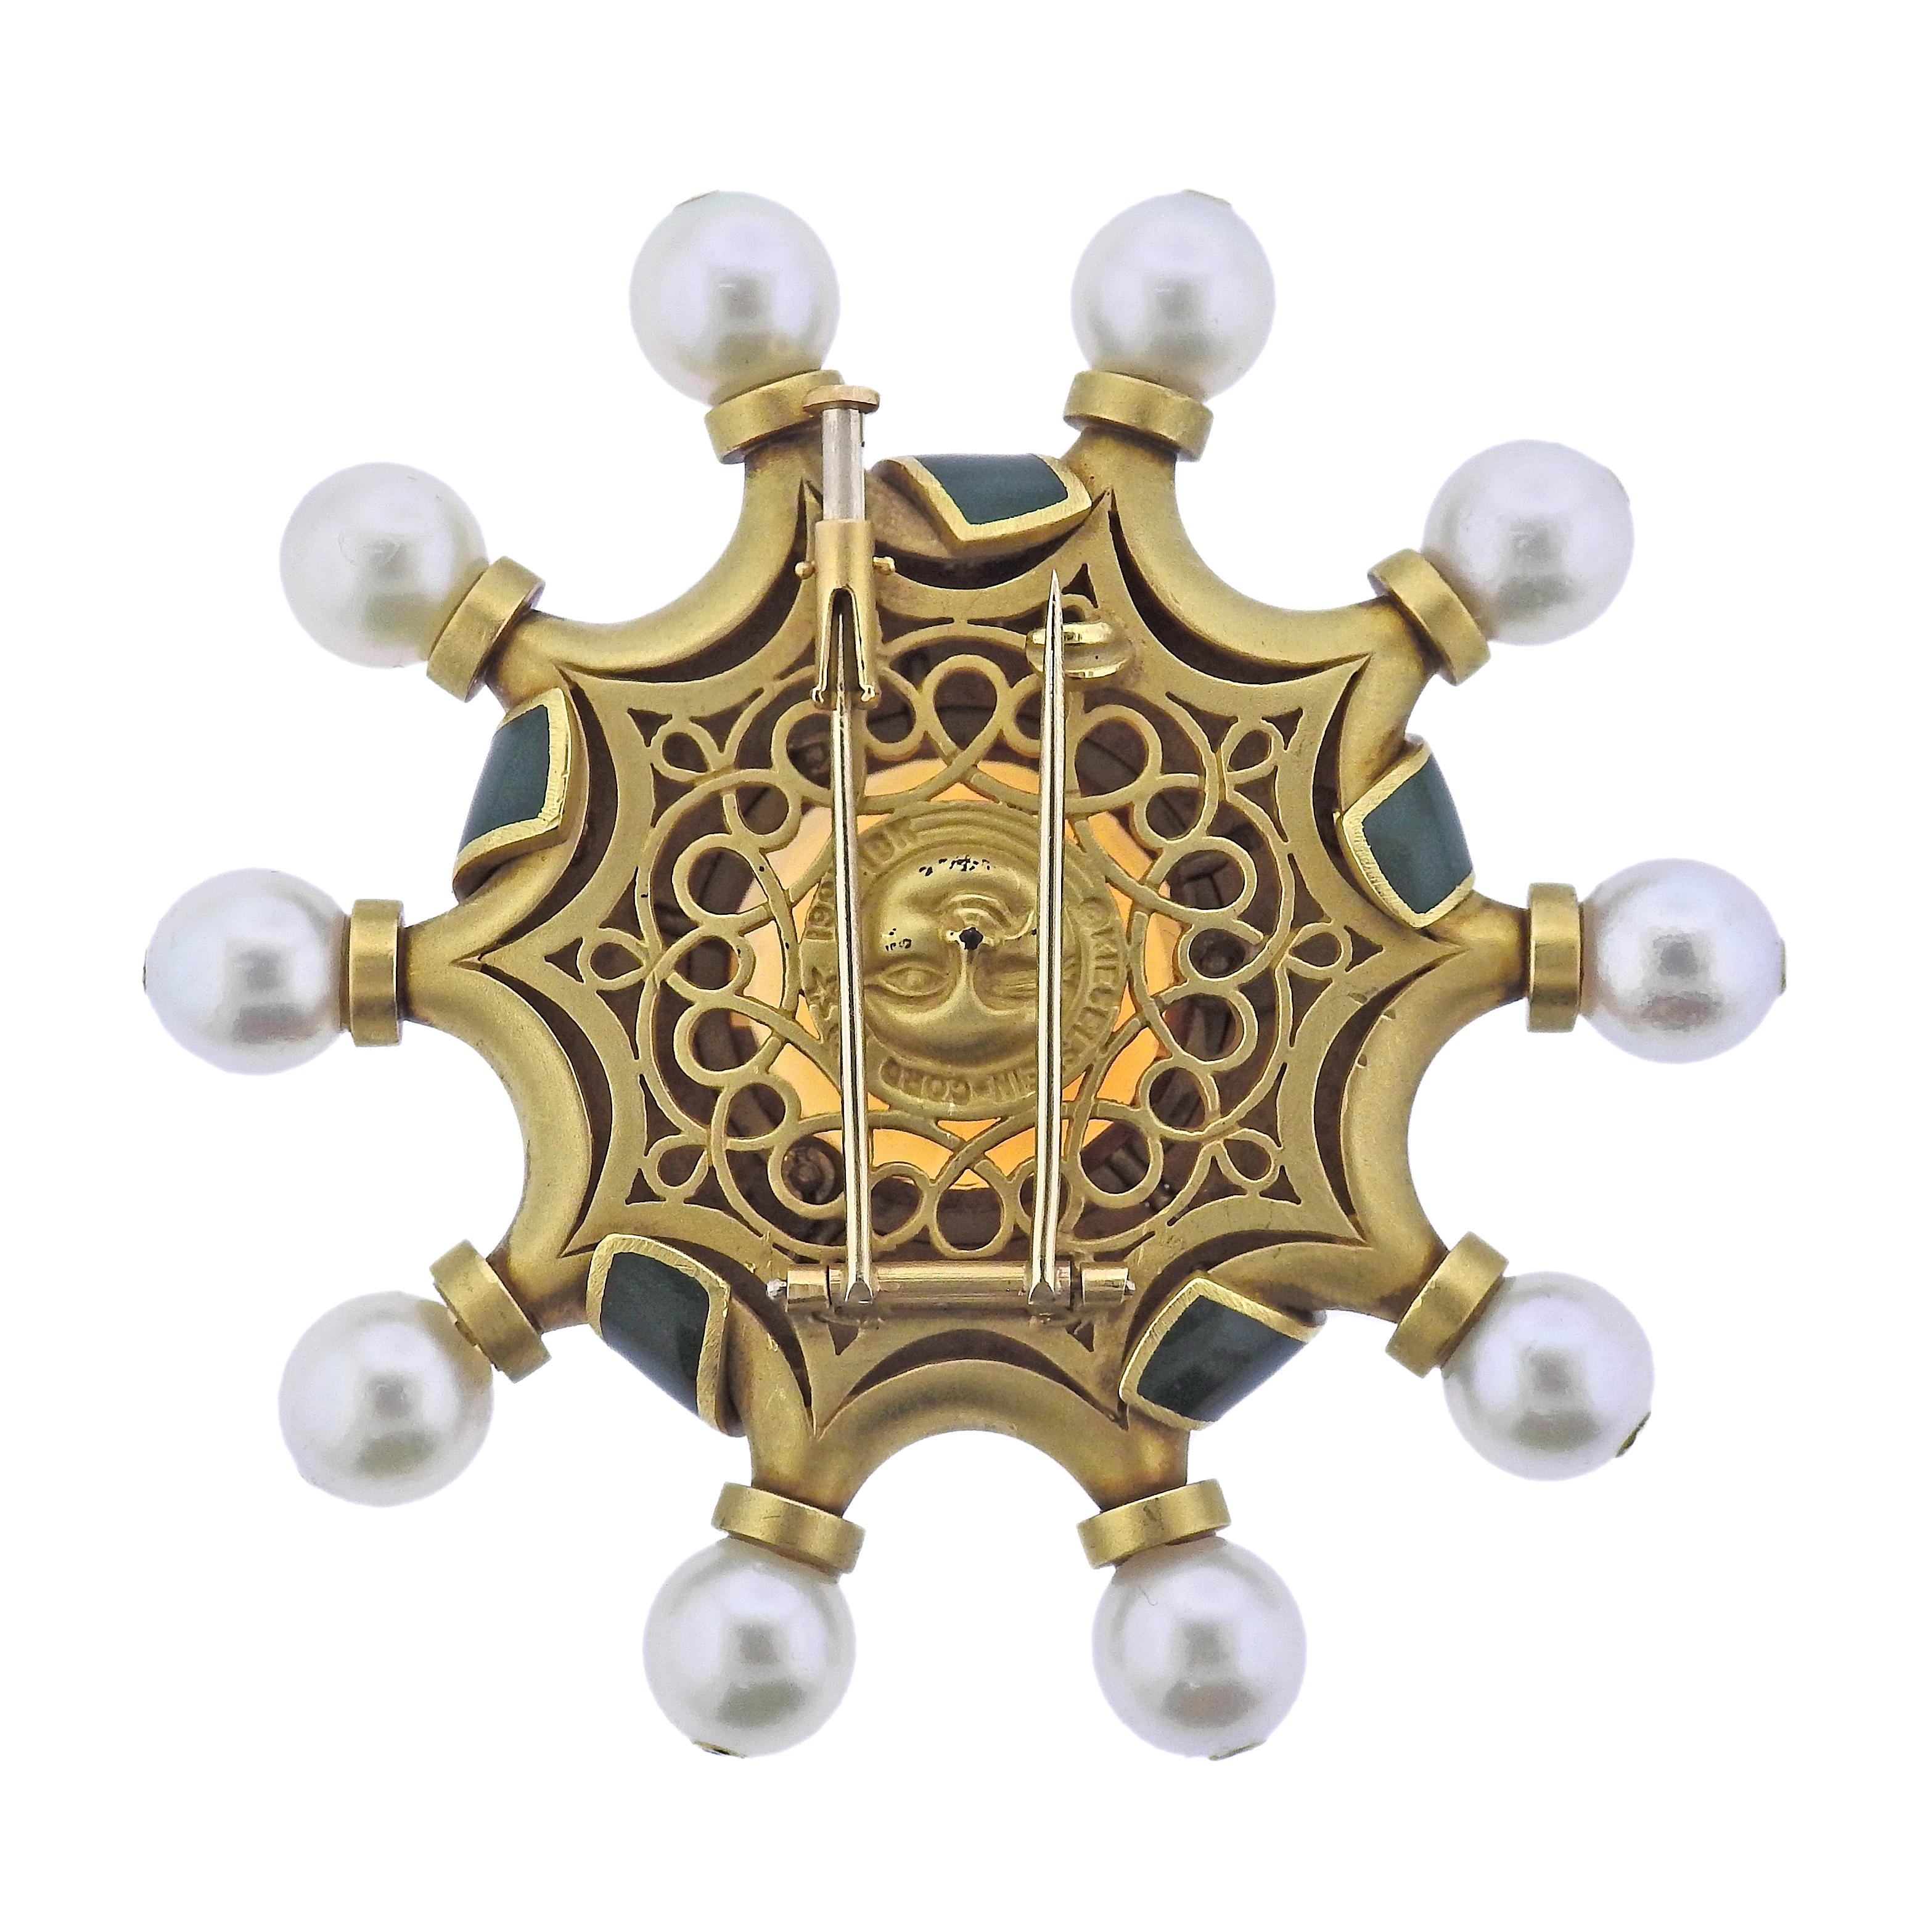 Taille ronde Kieselstein Cord Broche en or émaillée, diamants, perles, citrine et cordon en vente